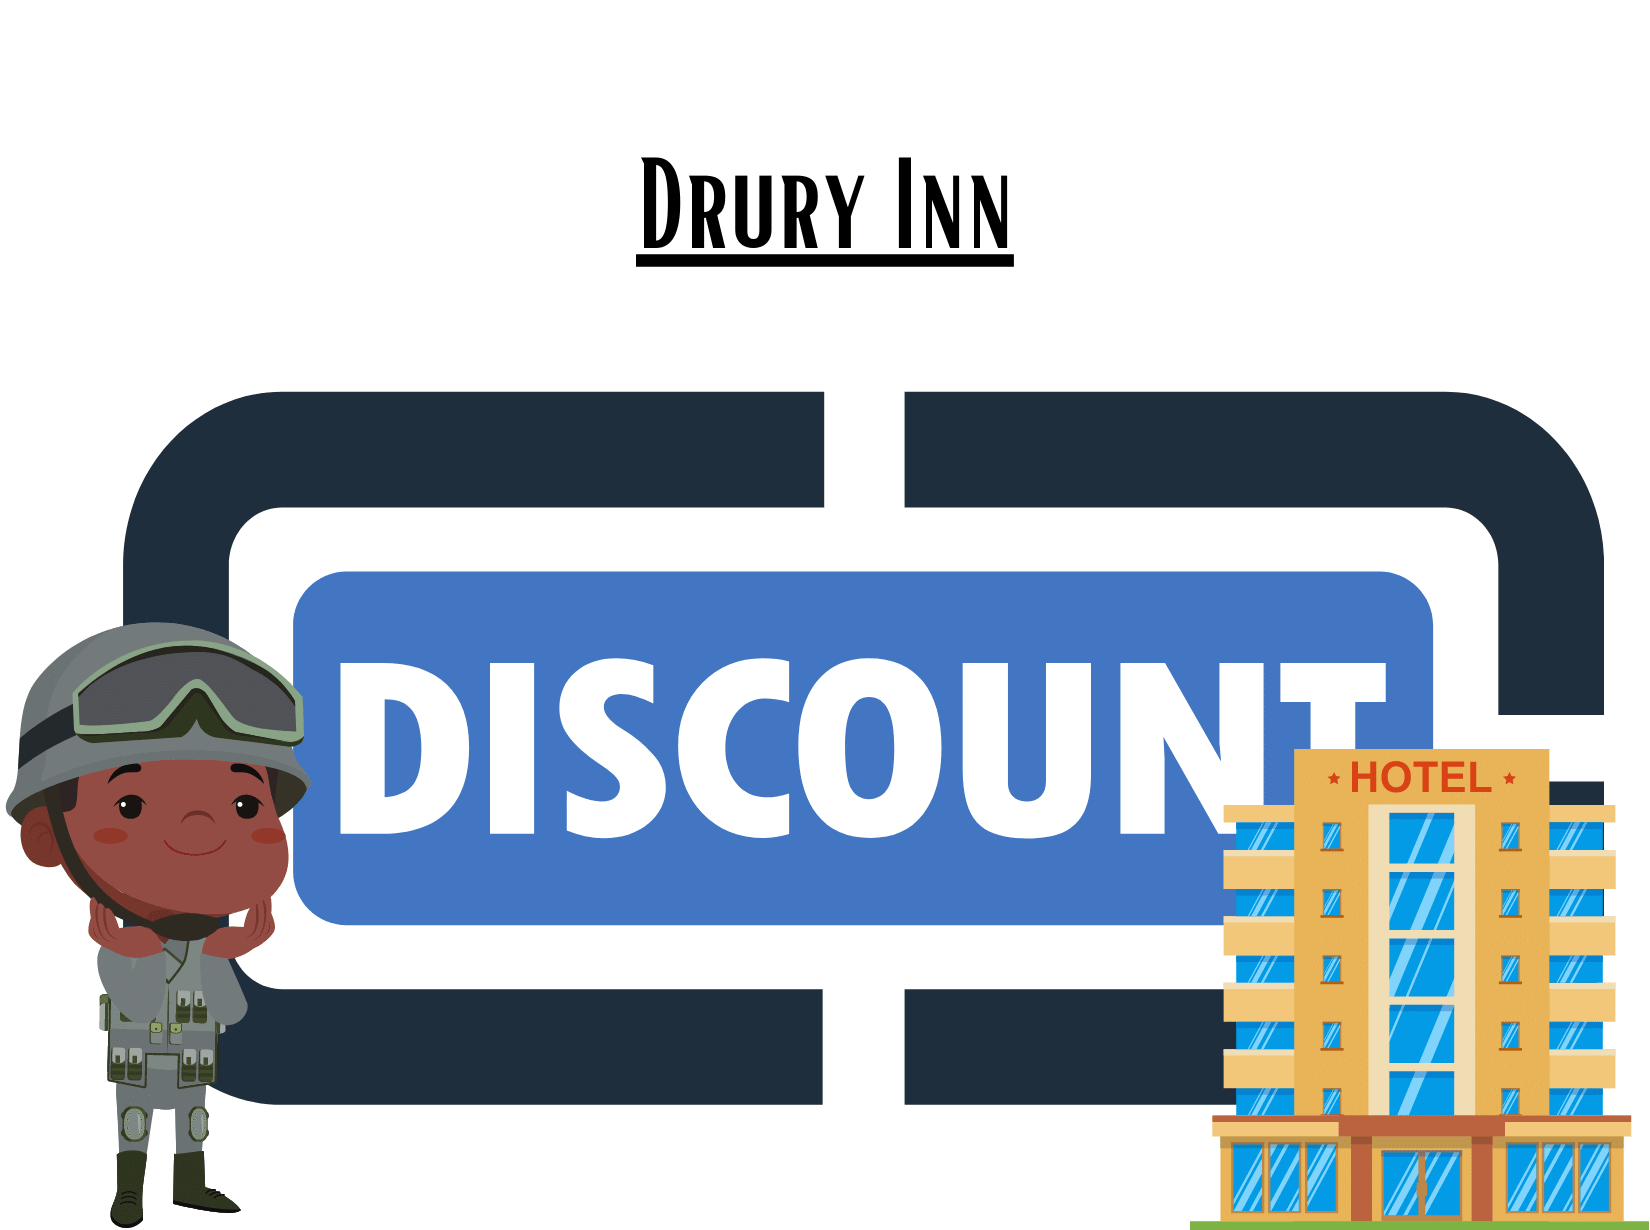 Drury Inn Military Discount (Save 10 Today!) Wildchildretire